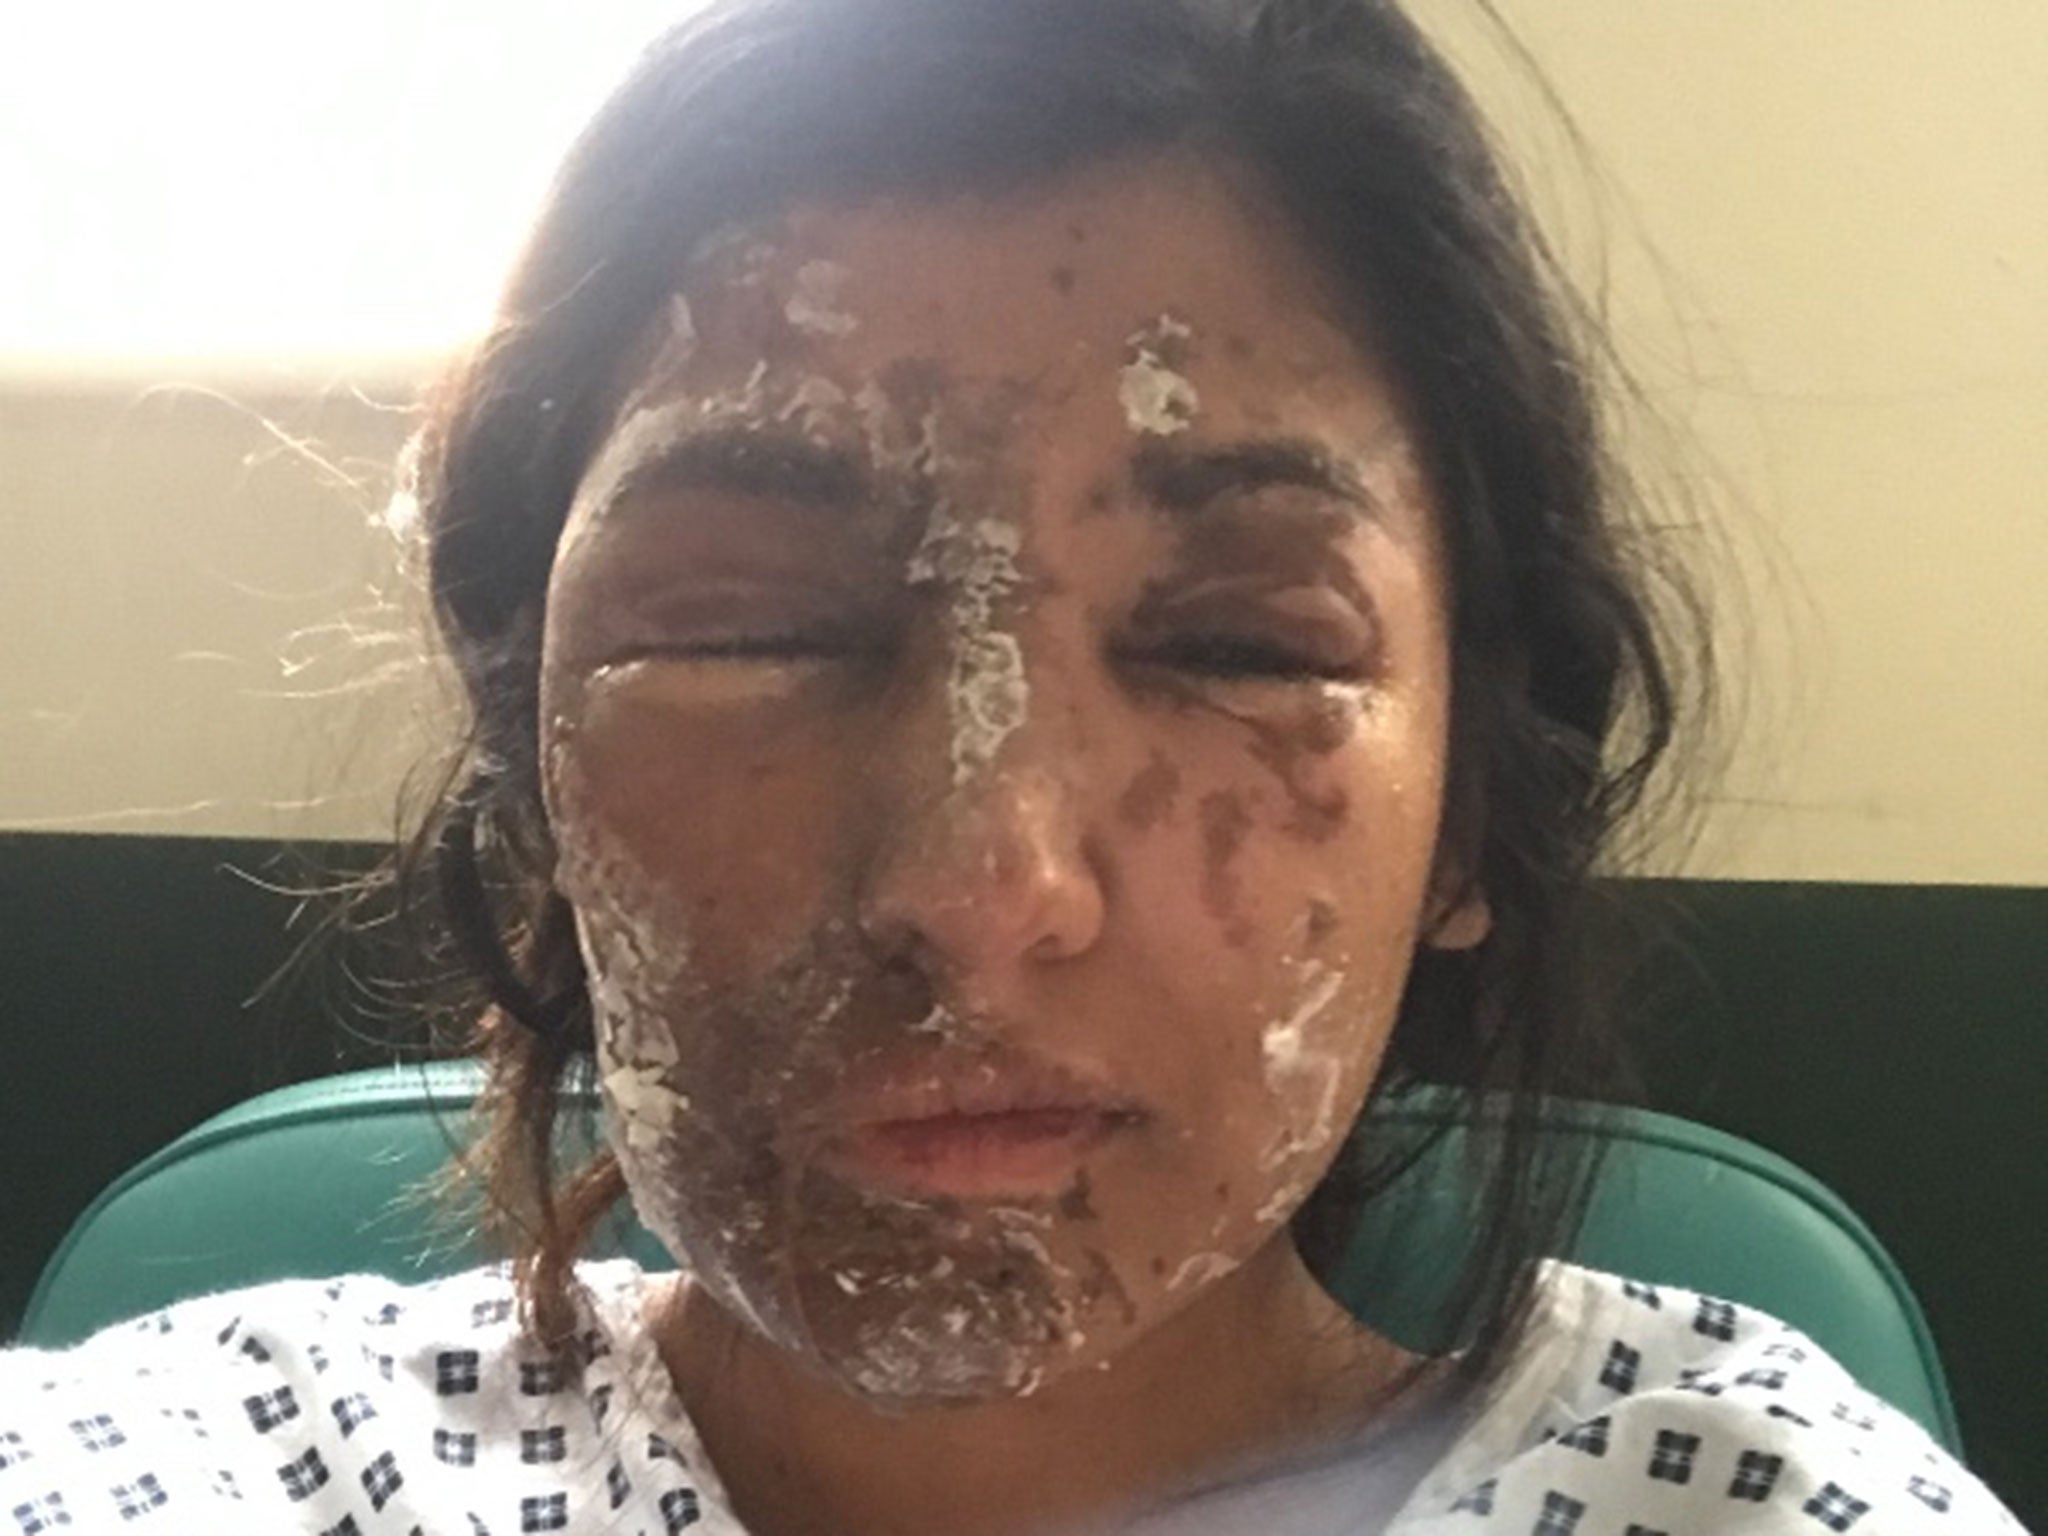 Resham Khan in hospital following an acid attack on 21 June